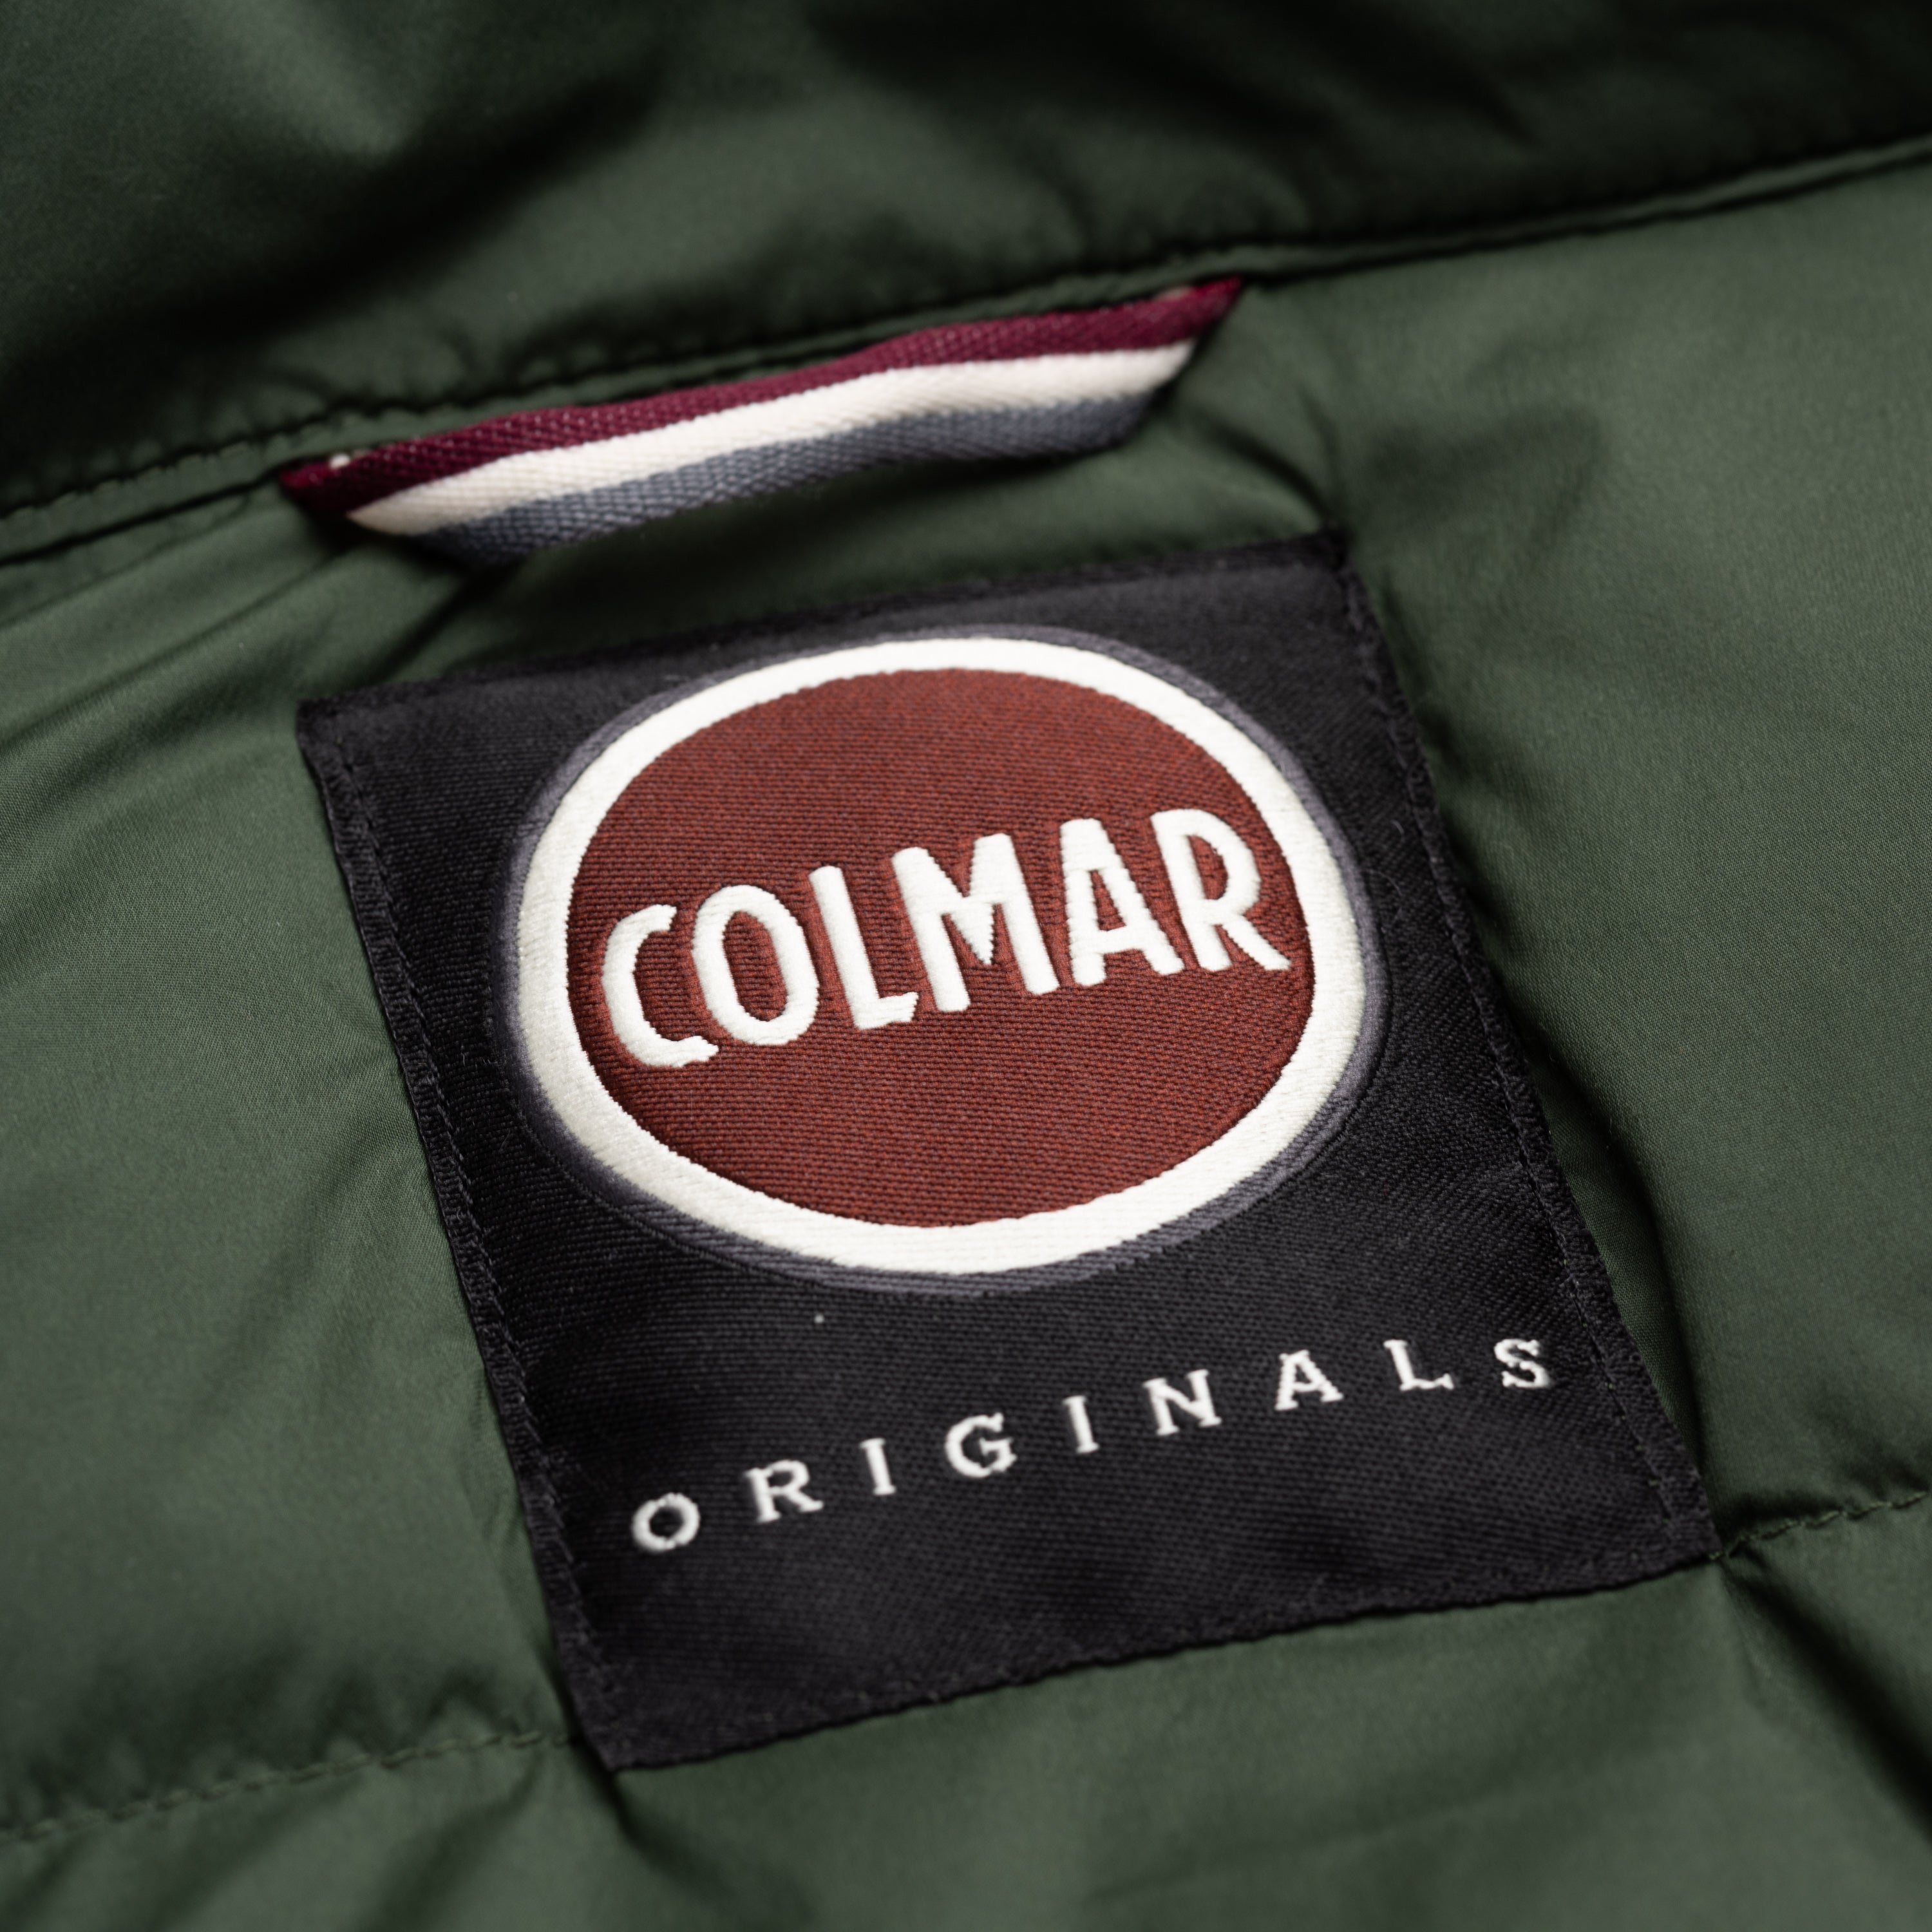 COLMAR Green Down-Feather Fur Trimmed Hooded Parka Jacket Coat EU 48 NEW US S COLMAR